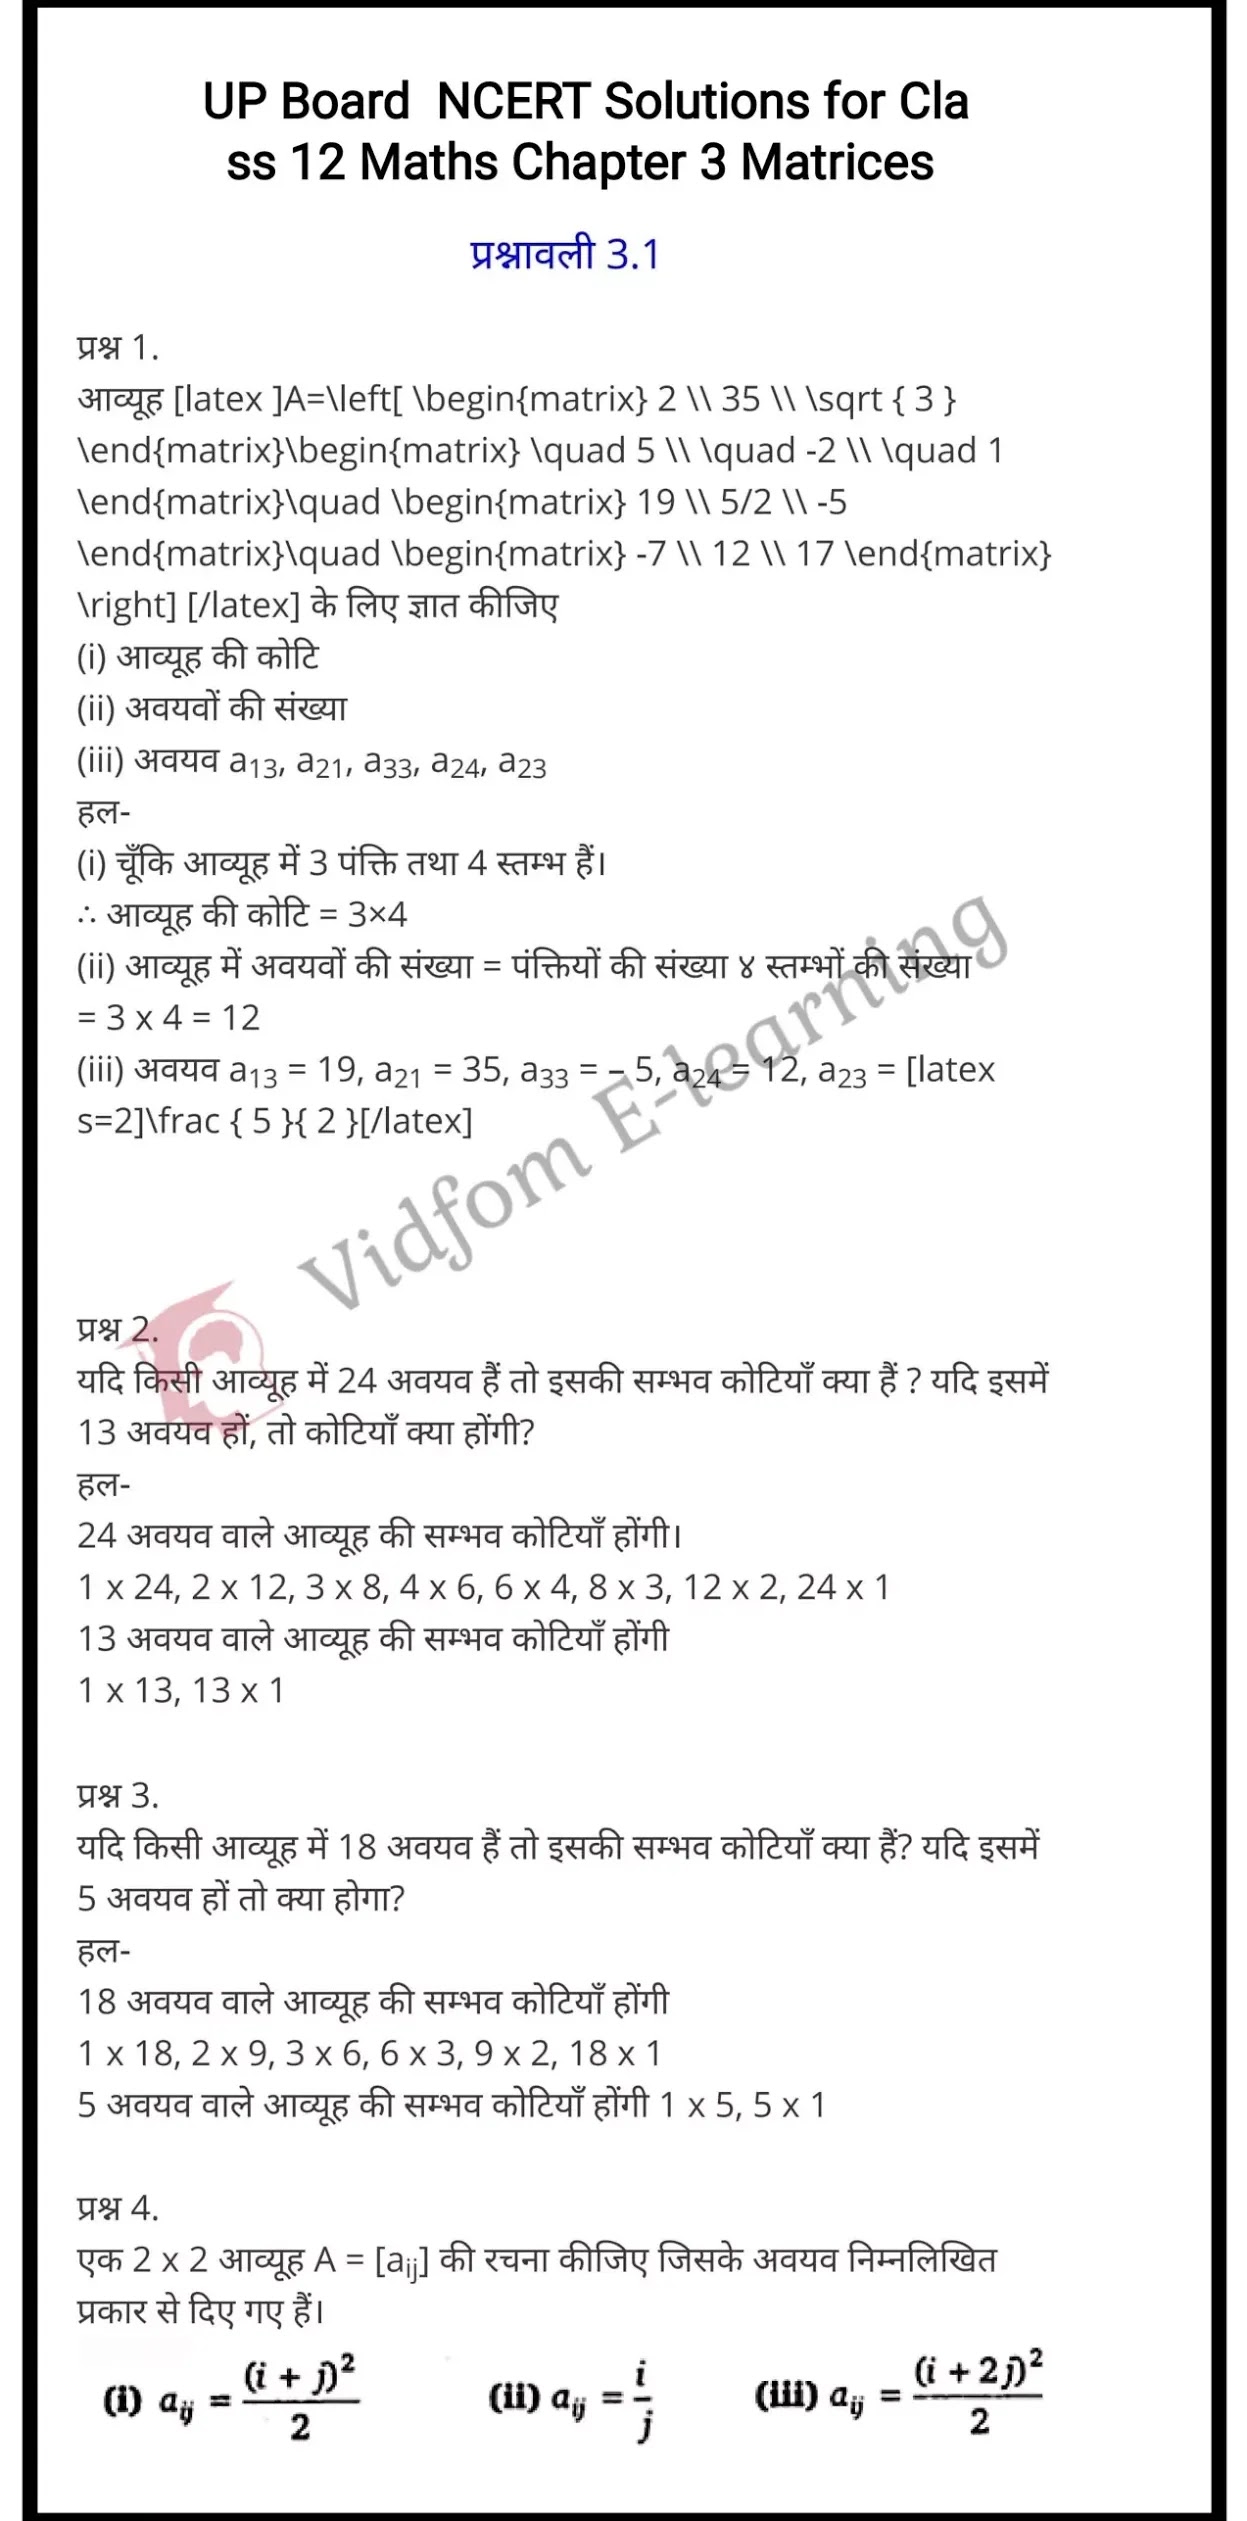 कक्षा 12 गणित  के नोट्स  हिंदी में एनसीईआरटी समाधान,     class 12 Maths Chapter 3,   class 12 Maths Chapter 3 ncert solutions in Hindi,   class 12 Maths Chapter 3 notes in hindi,   class 12 Maths Chapter 3 question answer,   class 12 Maths Chapter 3 notes,   class 12 Maths Chapter 3 class 12 Maths Chapter 3 in  hindi,    class 12 Maths Chapter 3 important questions in  hindi,   class 12 Maths Chapter 3 notes in hindi,    class 12 Maths Chapter 3 test,   class 12 Maths Chapter 3 pdf,   class 12 Maths Chapter 3 notes pdf,   class 12 Maths Chapter 3 exercise solutions,   class 12 Maths Chapter 3 notes study rankers,   class 12 Maths Chapter 3 notes,    class 12 Maths Chapter 3  class 12  notes pdf,   class 12 Maths Chapter 3 class 12  notes  ncert,   class 12 Maths Chapter 3 class 12 pdf,   class 12 Maths Chapter 3  book,   class 12 Maths Chapter 3 quiz class 12  ,    10  th class 12 Maths Chapter 3  book up board,   up board 10  th class 12 Maths Chapter 3 notes,  class 12 Maths,   class 12 Maths ncert solutions in Hindi,   class 12 Maths notes in hindi,   class 12 Maths question answer,   class 12 Maths notes,  class 12 Maths class 12 Maths Chapter 3 in  hindi,    class 12 Maths important questions in  hindi,   class 12 Maths notes in hindi,    class 12 Maths test,  class 12 Maths class 12 Maths Chapter 3 pdf,   class 12 Maths notes pdf,   class 12 Maths exercise solutions,   class 12 Maths,  class 12 Maths notes study rankers,   class 12 Maths notes,  class 12 Maths notes,   class 12 Maths  class 12  notes pdf,   class 12 Maths class 12  notes  ncert,   class 12 Maths class 12 pdf,   class 12 Maths  book,  class 12 Maths quiz class 12  ,  10  th class 12 Maths    book up board,    up board 10  th class 12 Maths notes,      कक्षा 12 गणित अध्याय 3 ,  कक्षा 12 गणित, कक्षा 12 गणित अध्याय 3  के नोट्स हिंदी में,  कक्षा 12 का हिंदी अध्याय 3 का प्रश्न उत्तर,  कक्षा 12 गणित अध्याय 3  के नोट्स,  10 कक्षा गणित  हिंदी में, कक्षा 12 गणित अध्याय 3  हिंदी में,  कक्षा 12 गणित अध्याय 3  महत्वपूर्ण प्रश्न हिंदी में, कक्षा 12   हिंदी के नोट्स  हिंदी में, गणित हिंदी में  कक्षा 12 नोट्स pdf,    गणित हिंदी में  कक्षा 12 नोट्स 2021 ncert,   गणित हिंदी  कक्षा 12 pdf,   गणित हिंदी में  पुस्तक,   गणित हिंदी में की बुक,   गणित हिंदी में  प्रश्नोत्तरी class 12 ,  बिहार बोर्ड   पुस्तक 12वीं हिंदी नोट्स,    गणित कक्षा 12 नोट्स 2021 ncert,   गणित  कक्षा 12 pdf,   गणित  पुस्तक,   गणित  प्रश्नोत्तरी class 12, कक्षा 12 गणित,  कक्षा 12 गणित  के नोट्स हिंदी में,  कक्षा 12 का हिंदी का प्रश्न उत्तर,  कक्षा 12 गणित  के नोट्स,  10 कक्षा हिंदी 2021  हिंदी में, कक्षा 12 गणित  हिंदी में,  कक्षा 12 गणित  महत्वपूर्ण प्रश्न हिंदी में, कक्षा 12 गणित  नोट्स  हिंदी में,